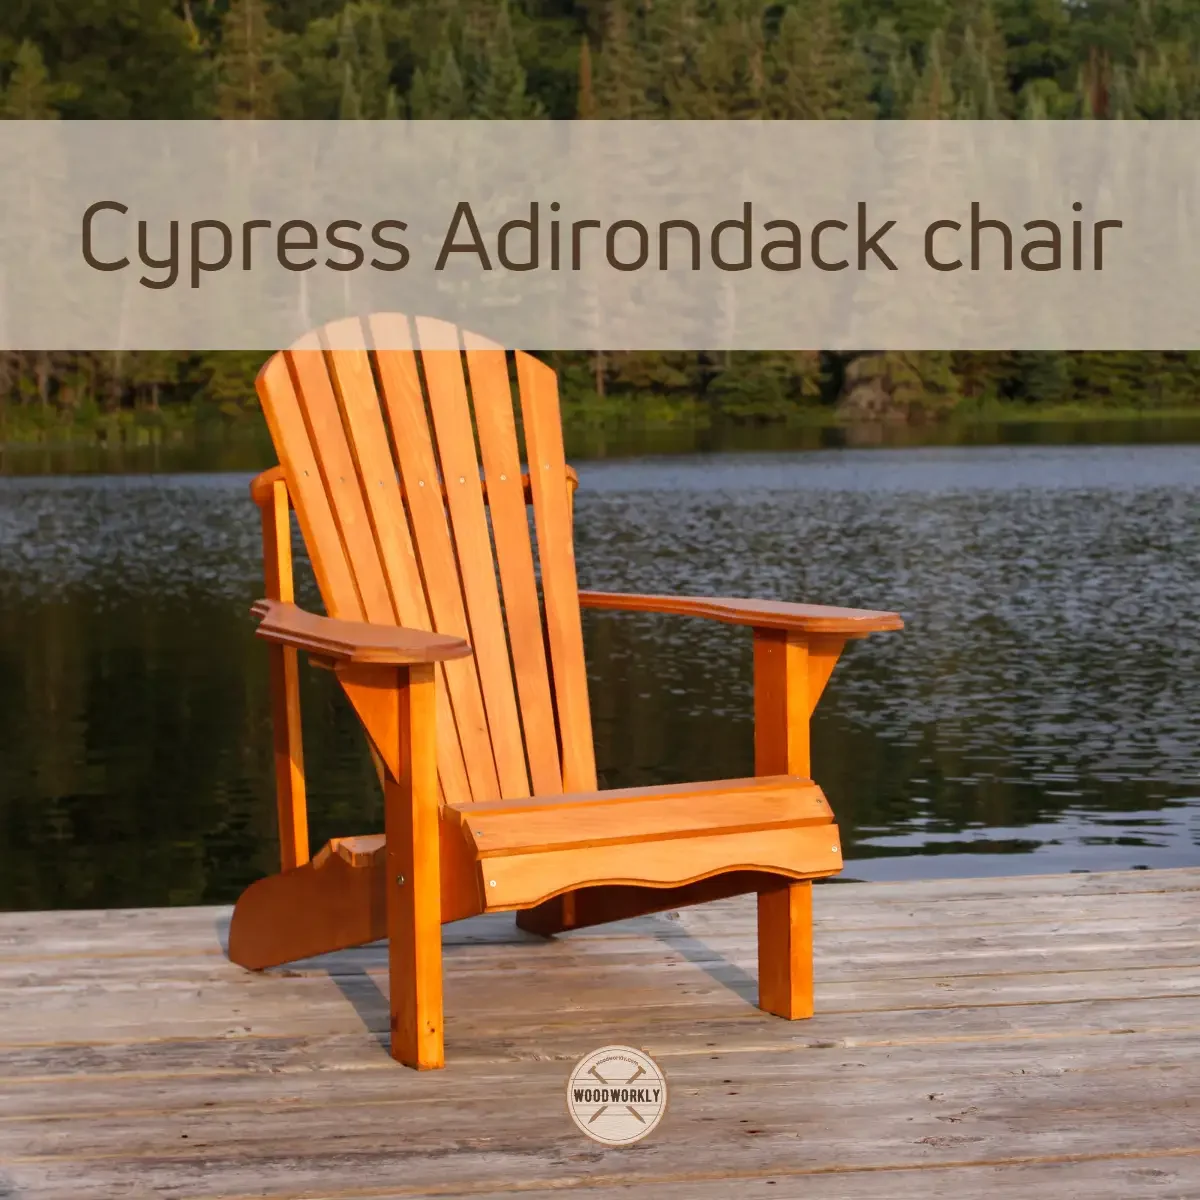 Cypress Adirondack chair